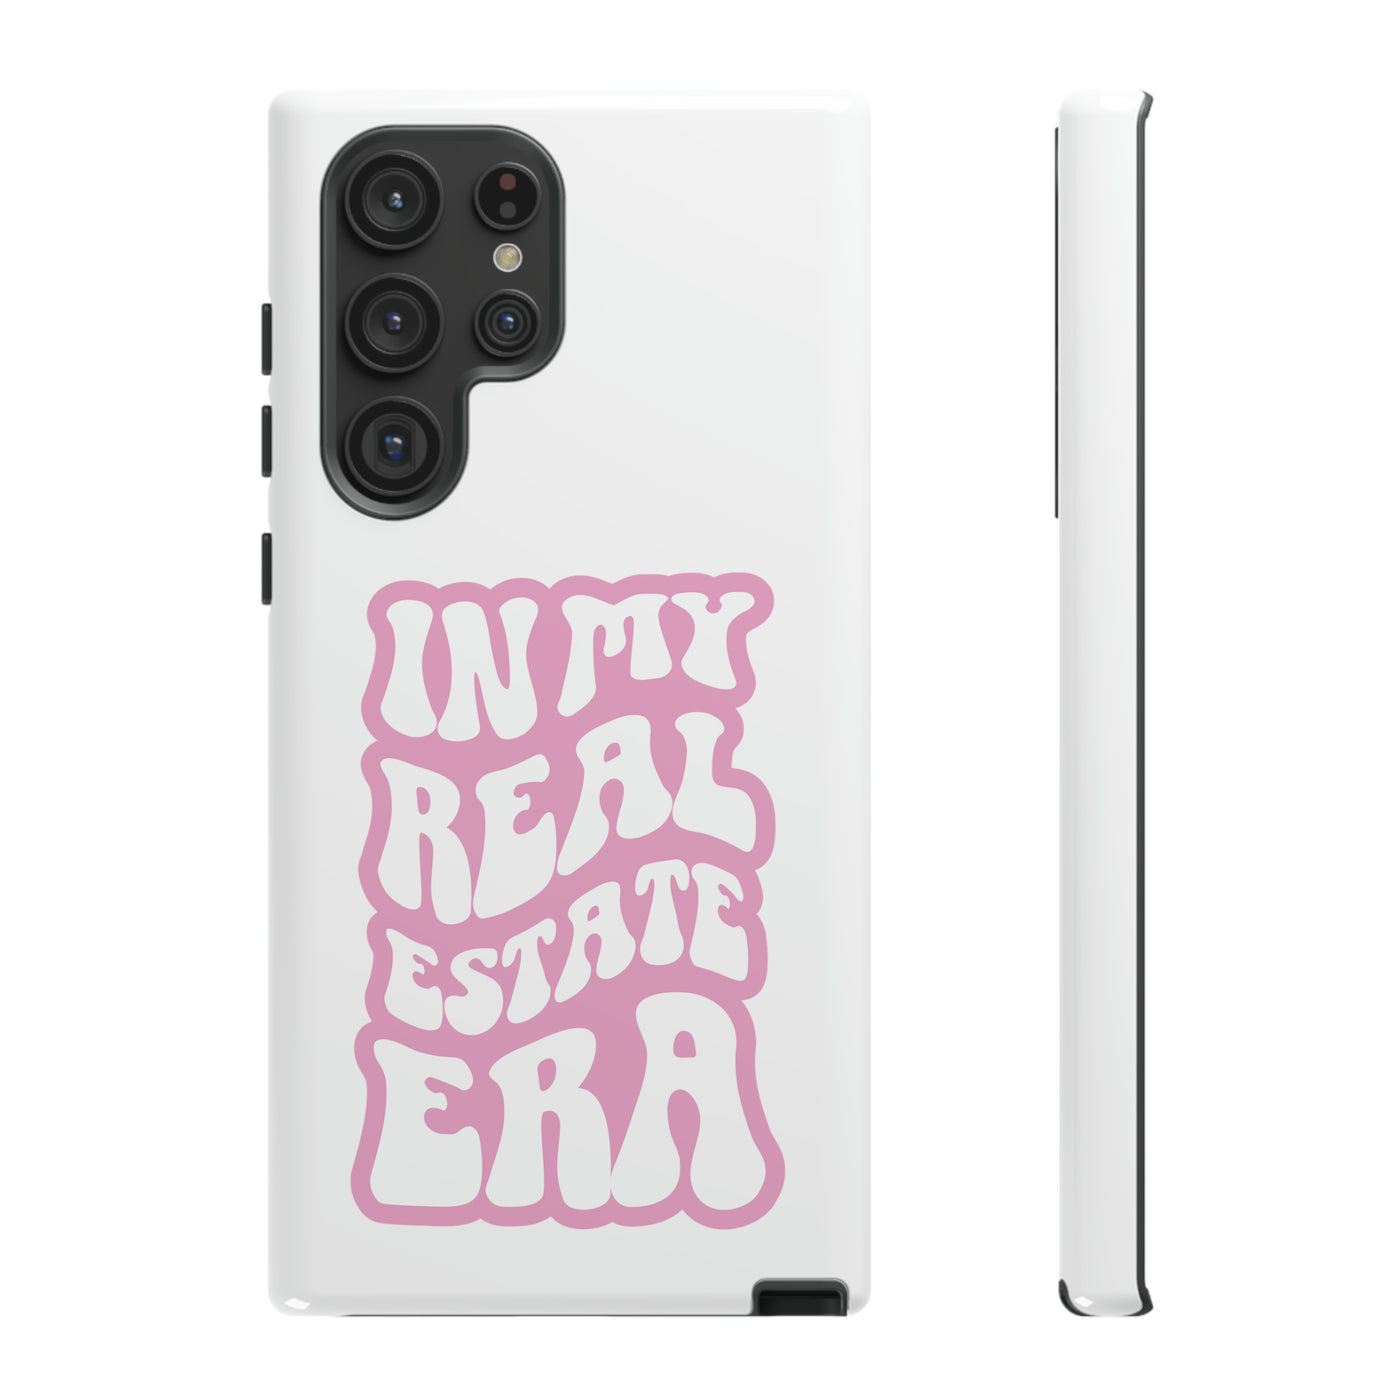 In My Real Estate Era Phone Case - Pink & White